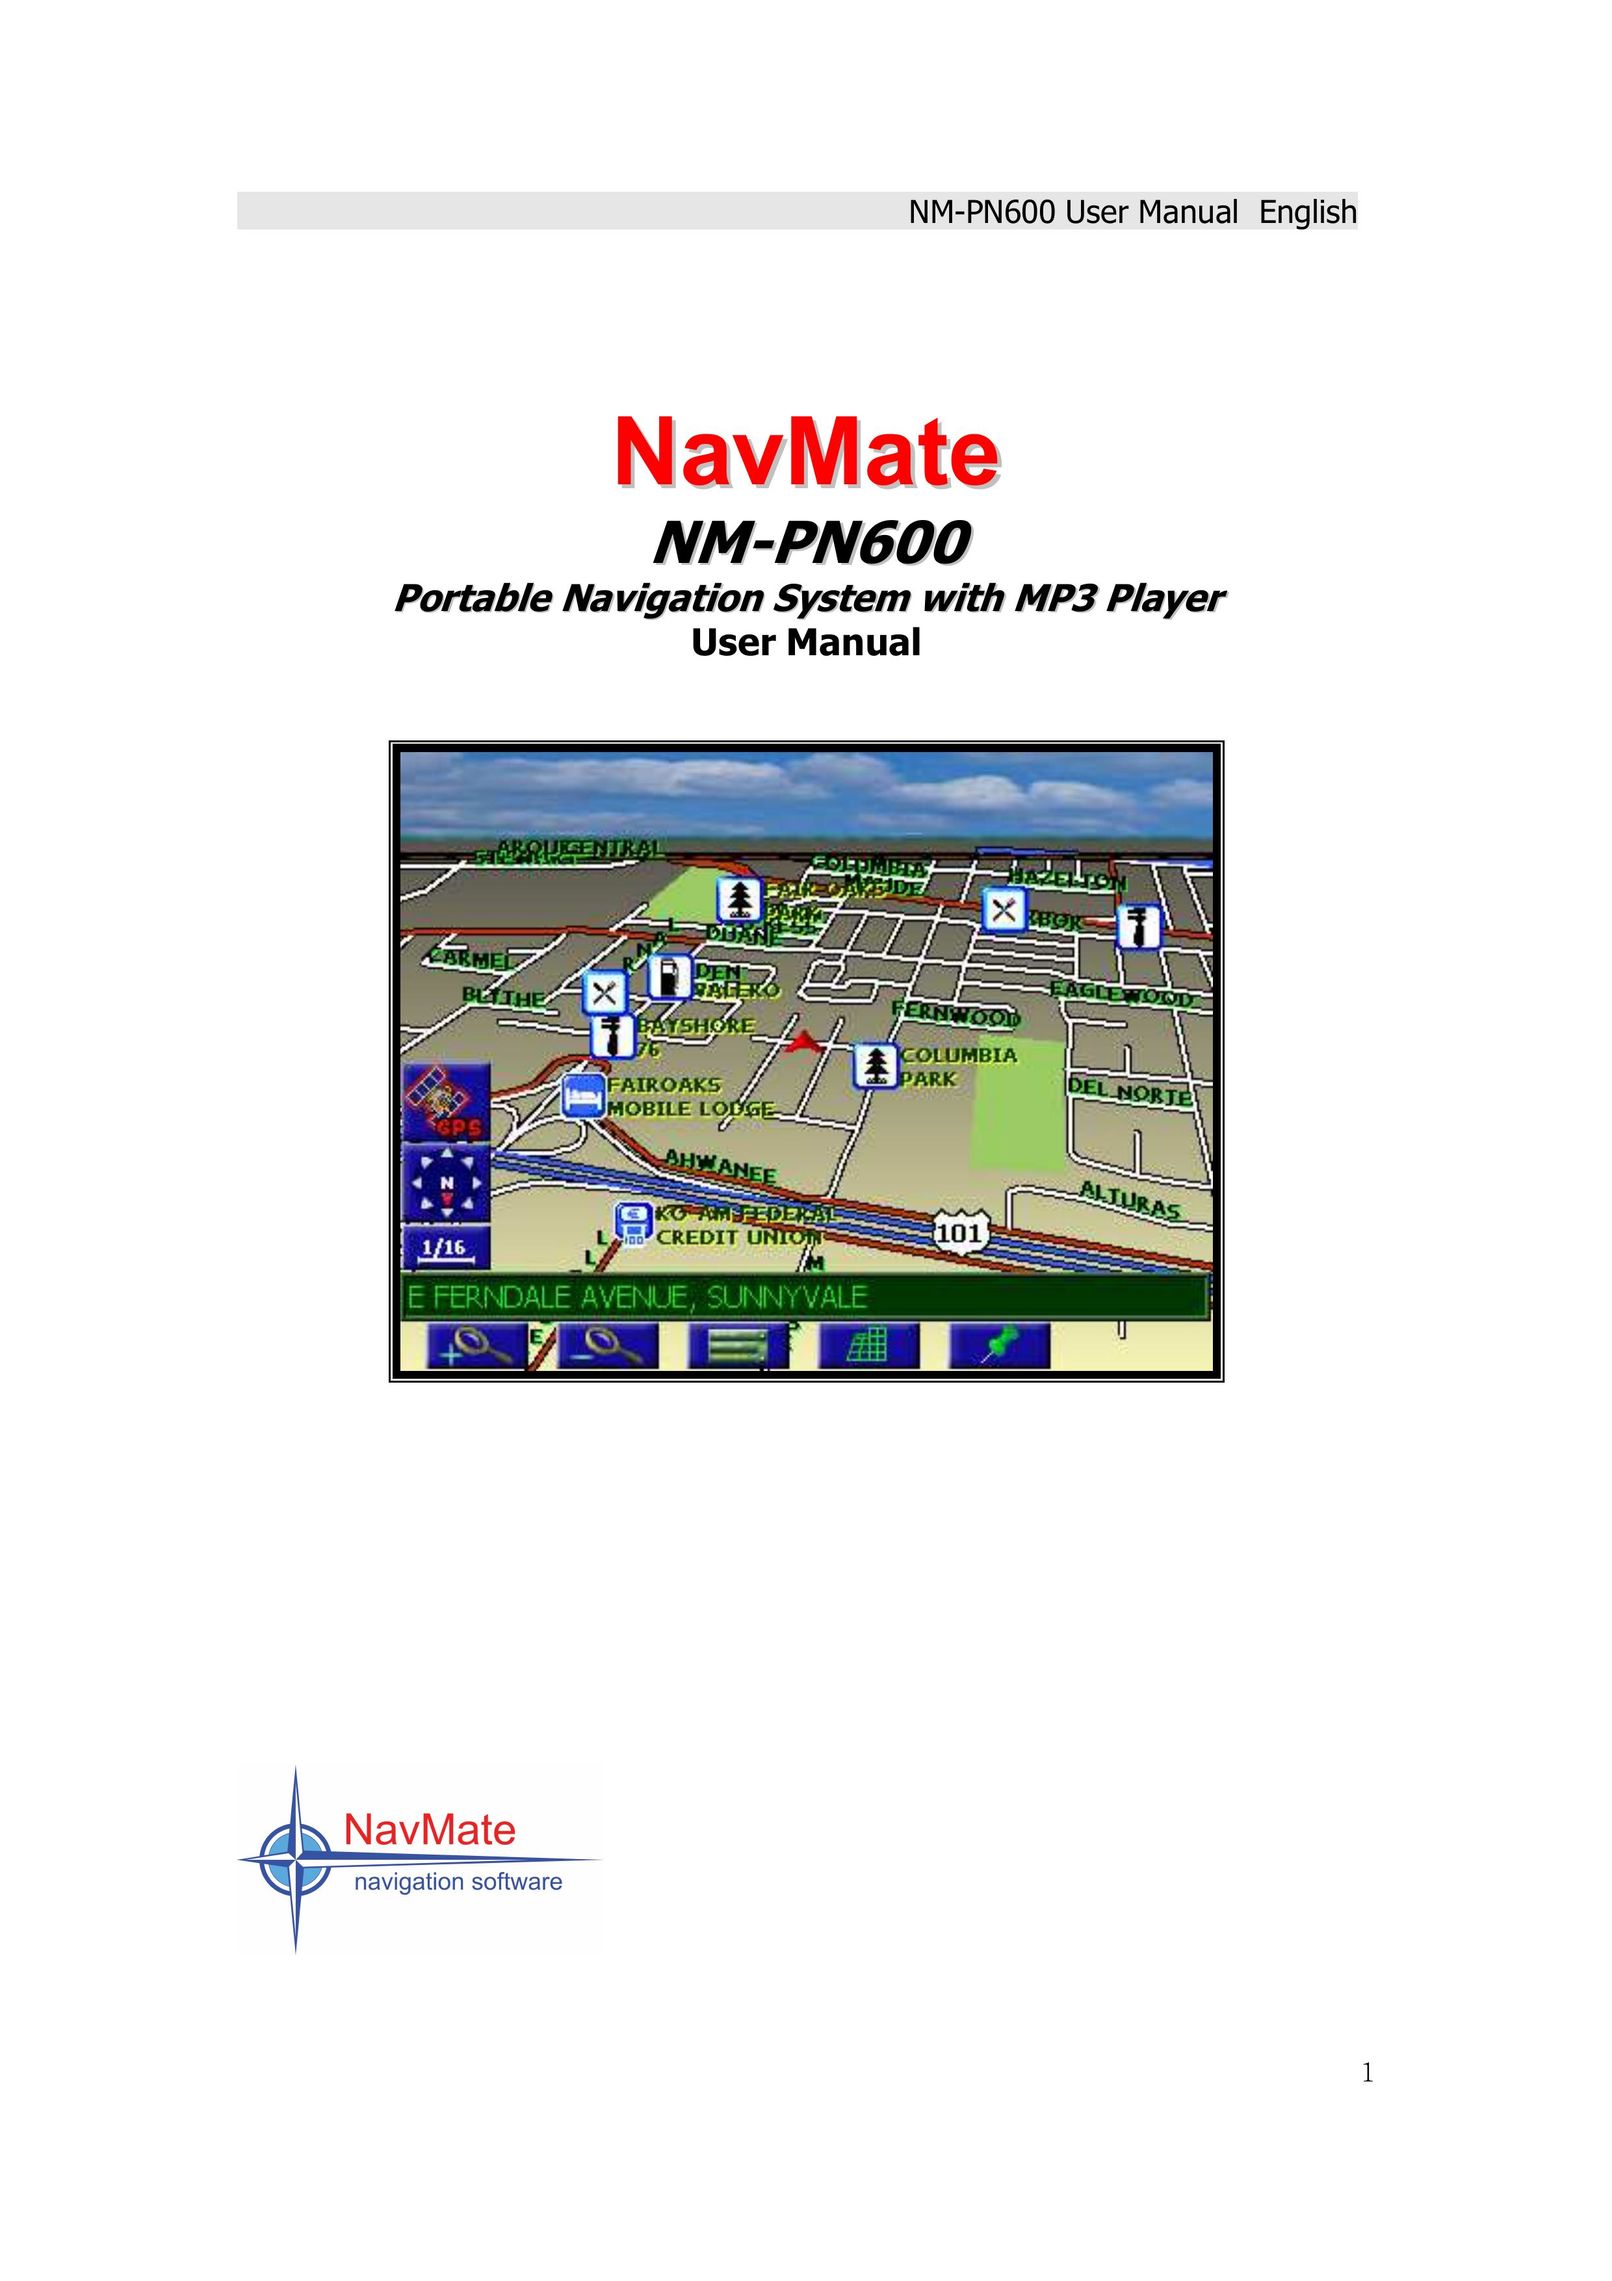 Horizon Navigation NM-PN600 MP3 Player User Manual